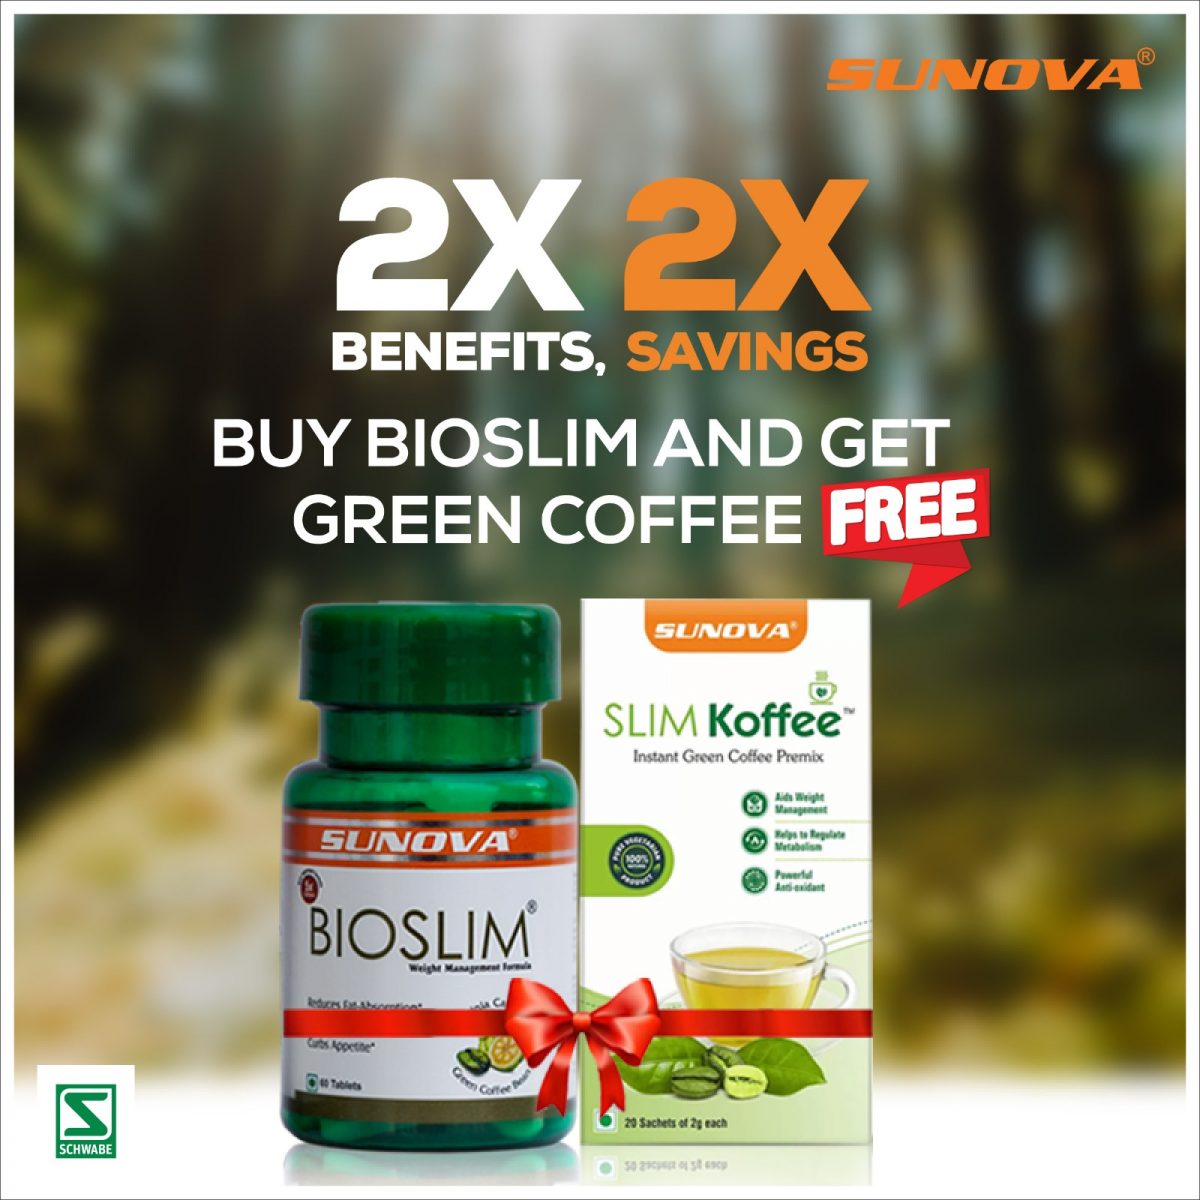 Bioslim and green coffee